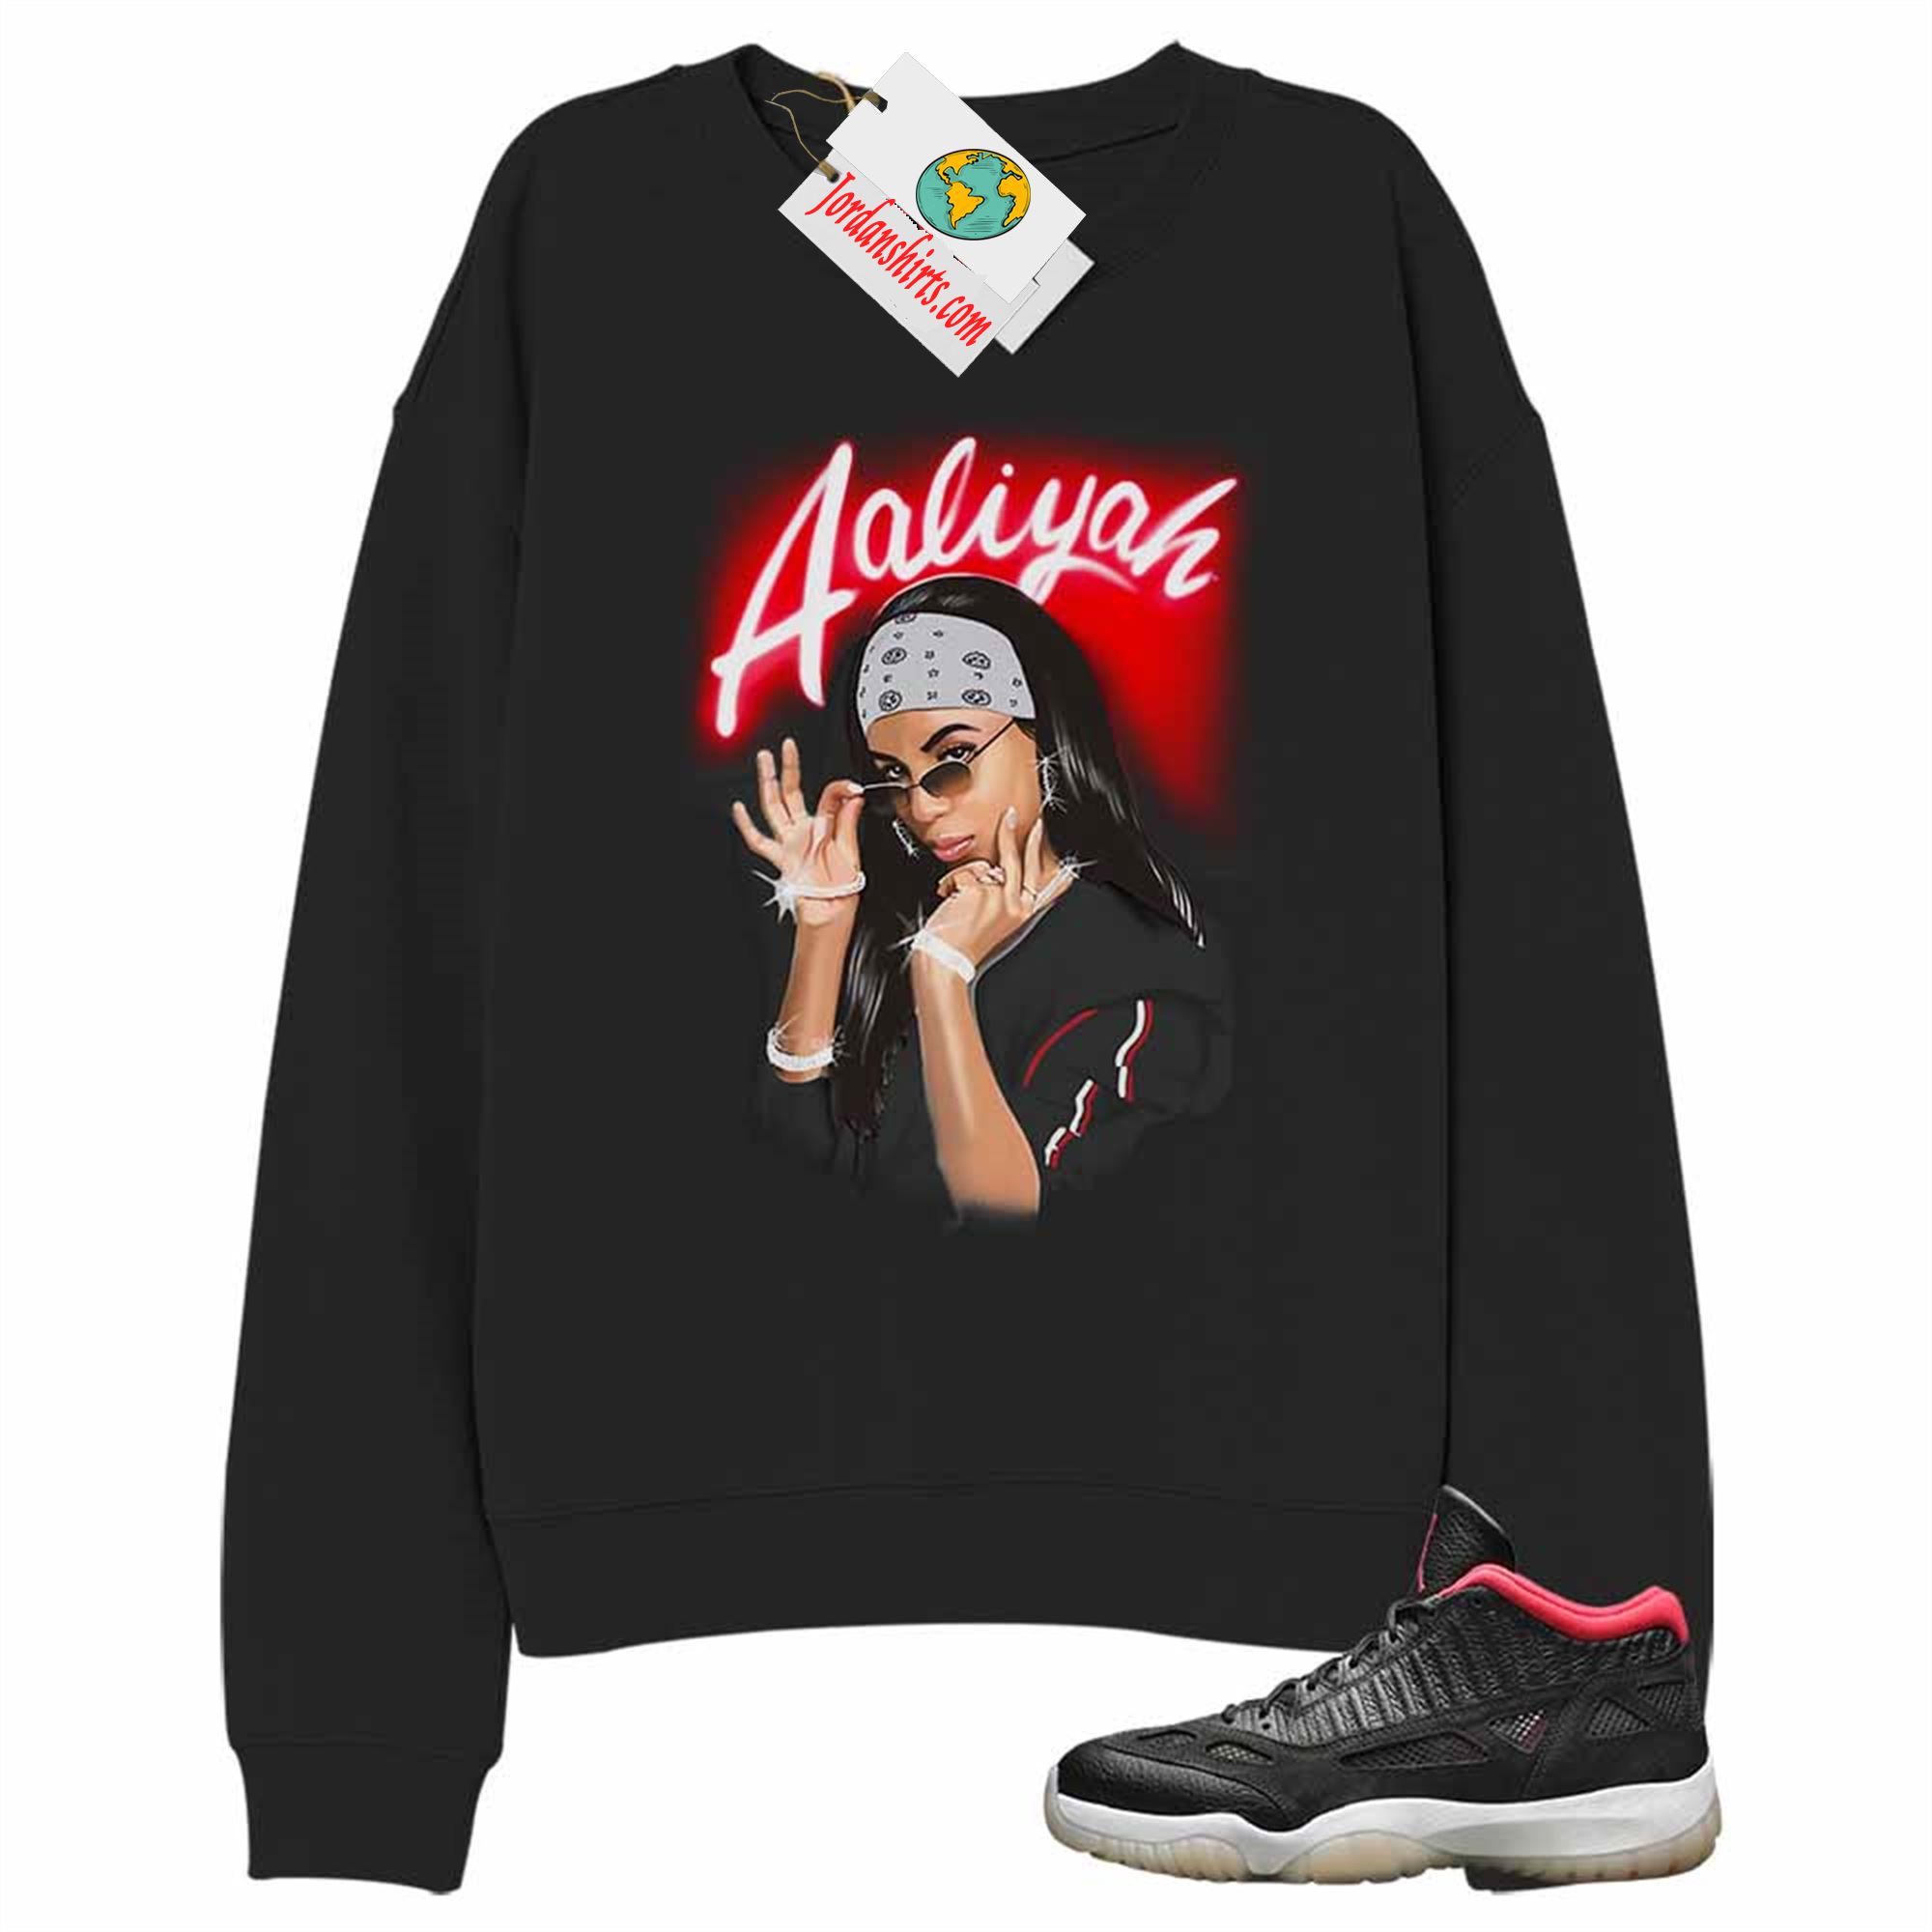 Jordan 10 Shirt, Aaliyah Airbrush Black T-shirt Air Jordan 10 Dark Mocha 10s Plus Size Up To 5xl